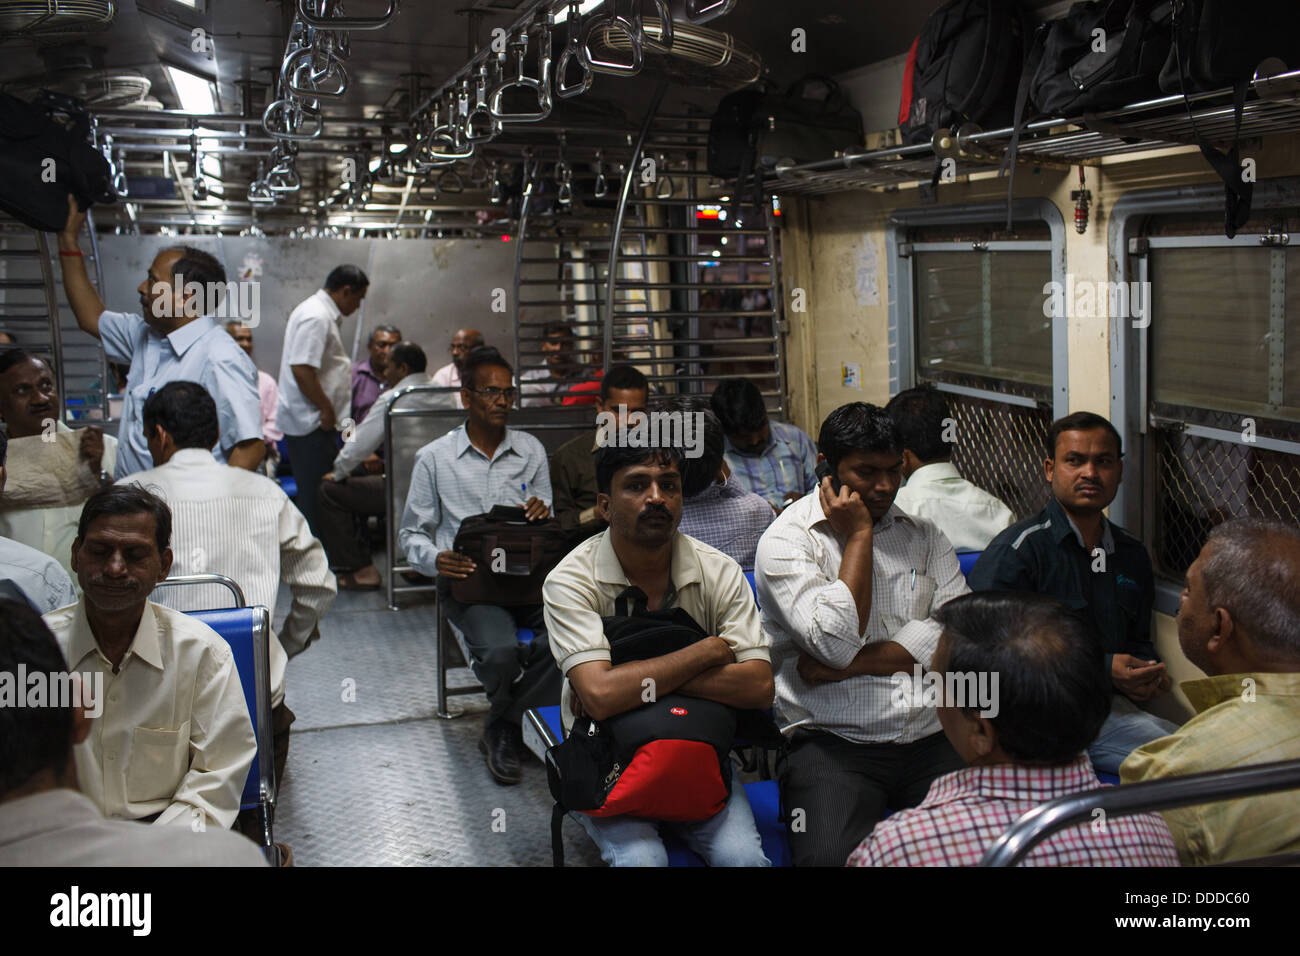 Passagers et trains bondés de la Gare Chhatrapati Shivaji (Victoria Terminus) gare de Mumbai, Inde. Banque D'Images